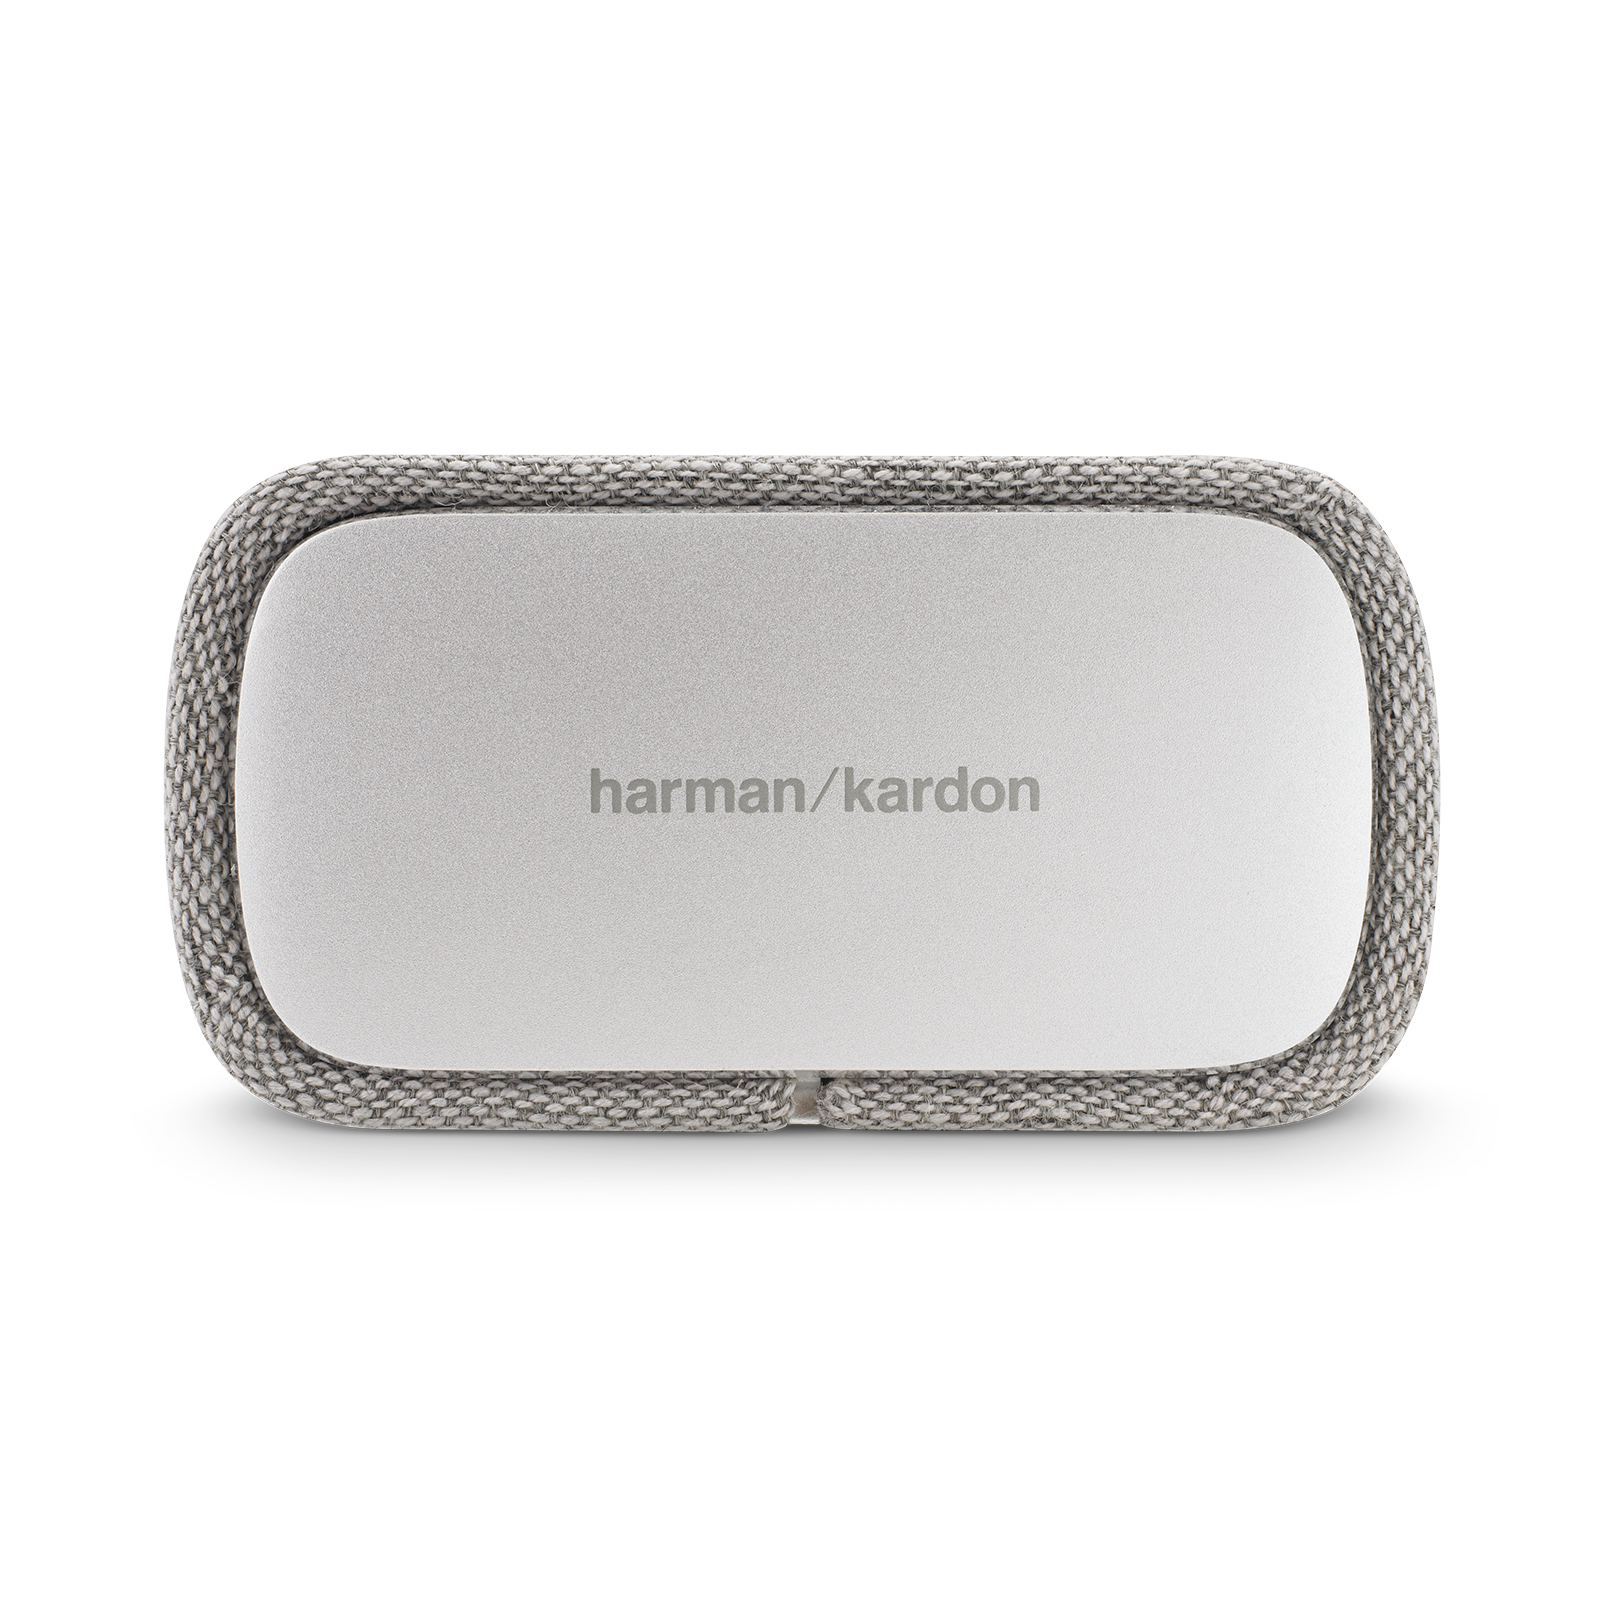 Harman Kardon Citation Bar - Grey - The smartest soundbar for movies and music - Detailshot 3